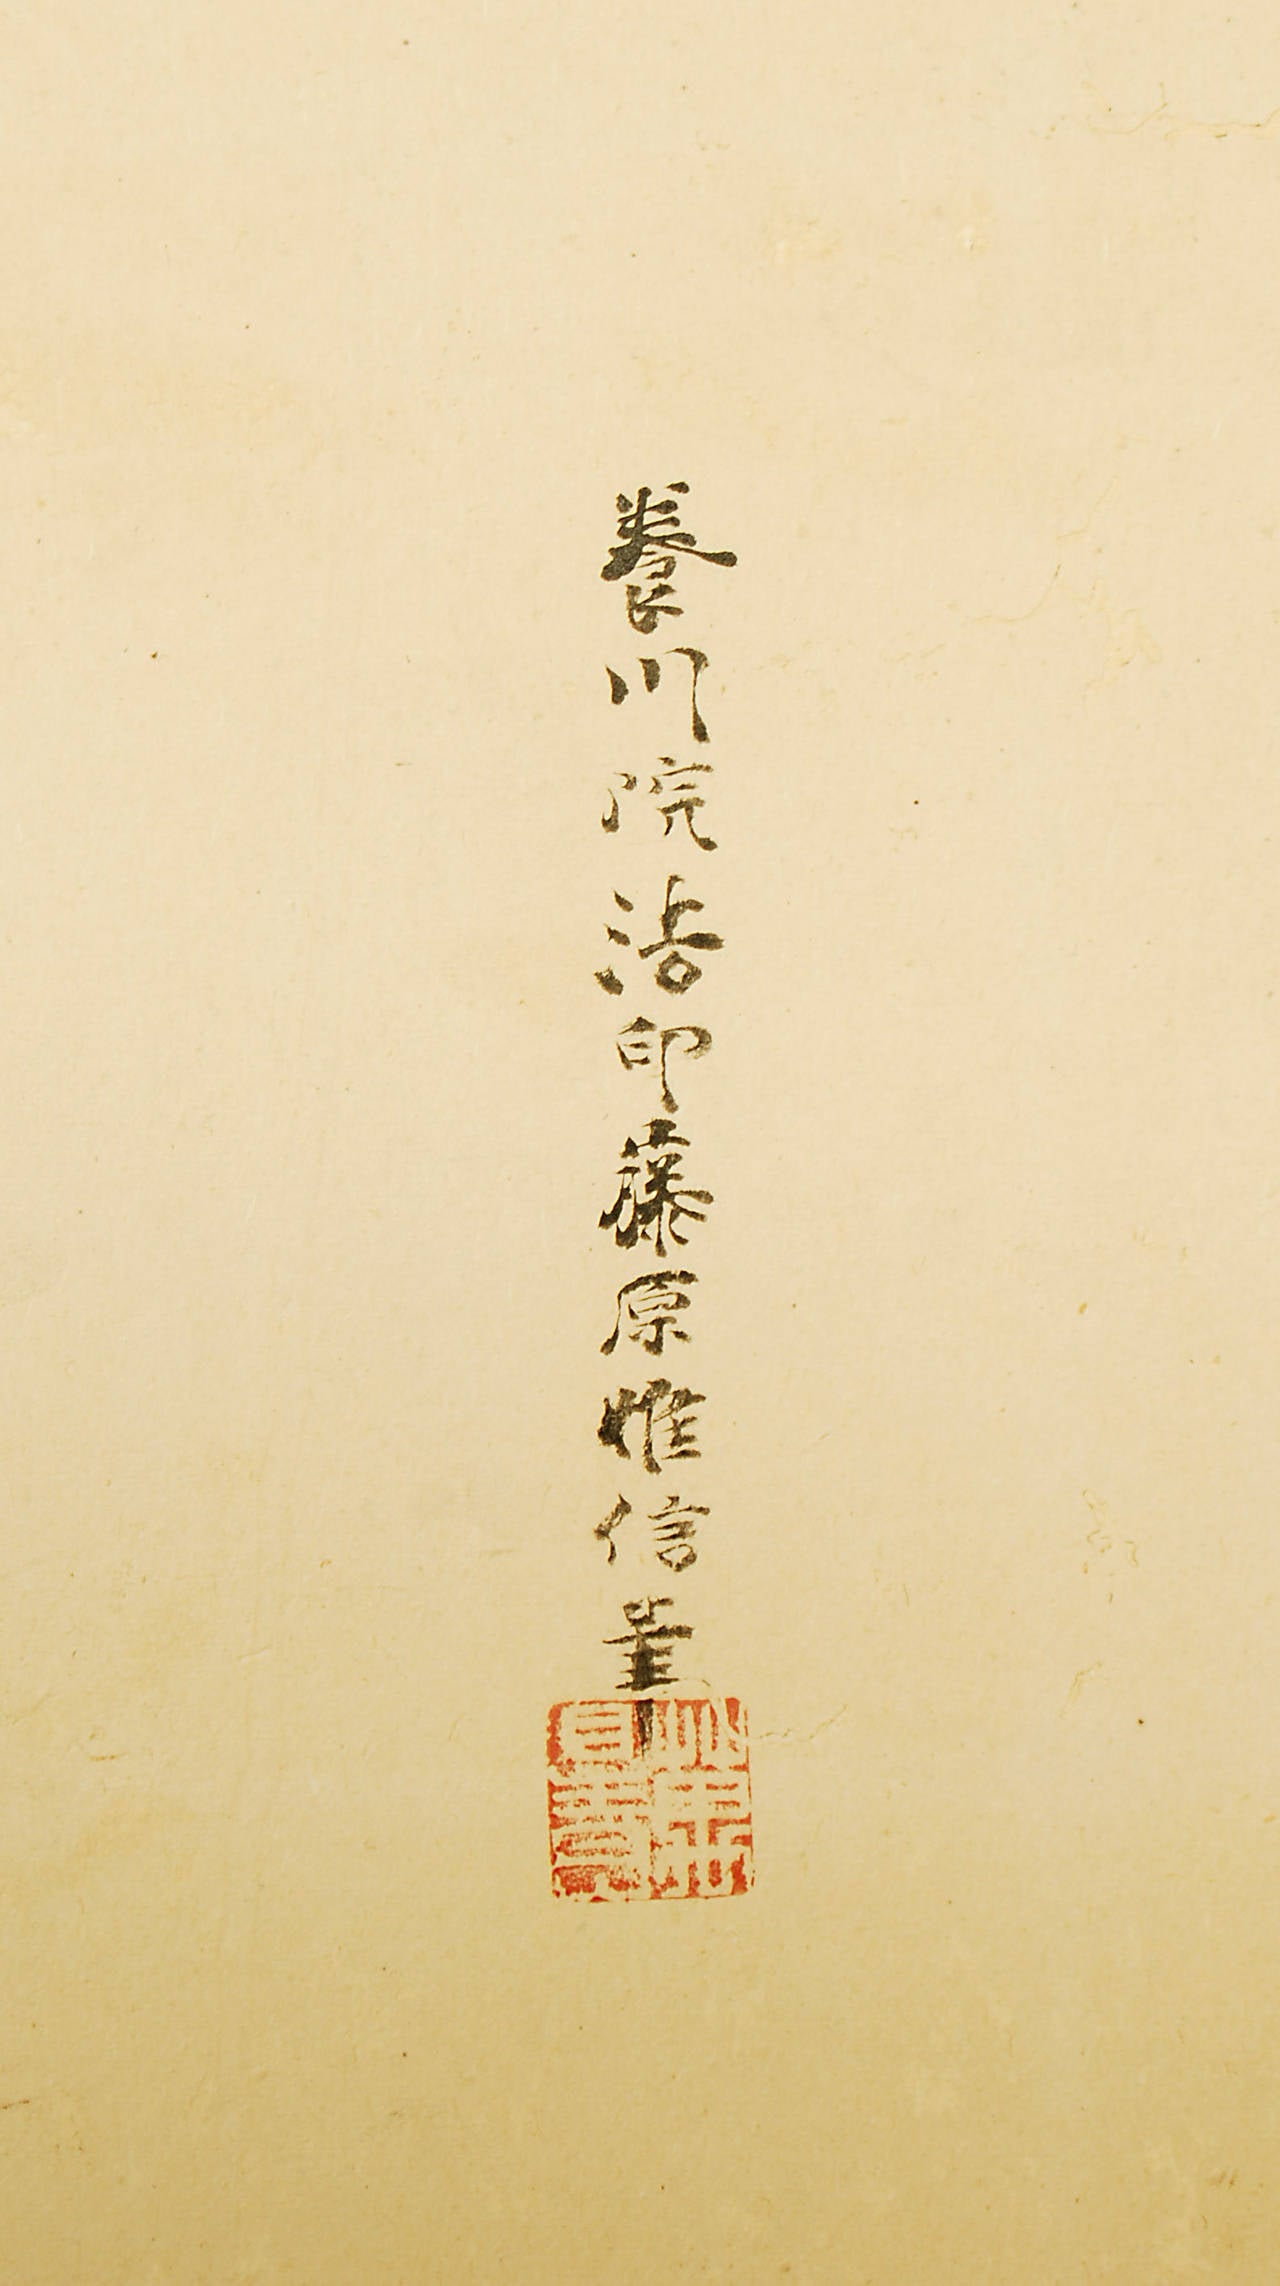 Six-panel Kano School tiger screen by Yosenin Korenobu (1753-1808). Sumi-e ink on paper, late 18th century.

Dimensions: H 169cm x W 382cm.